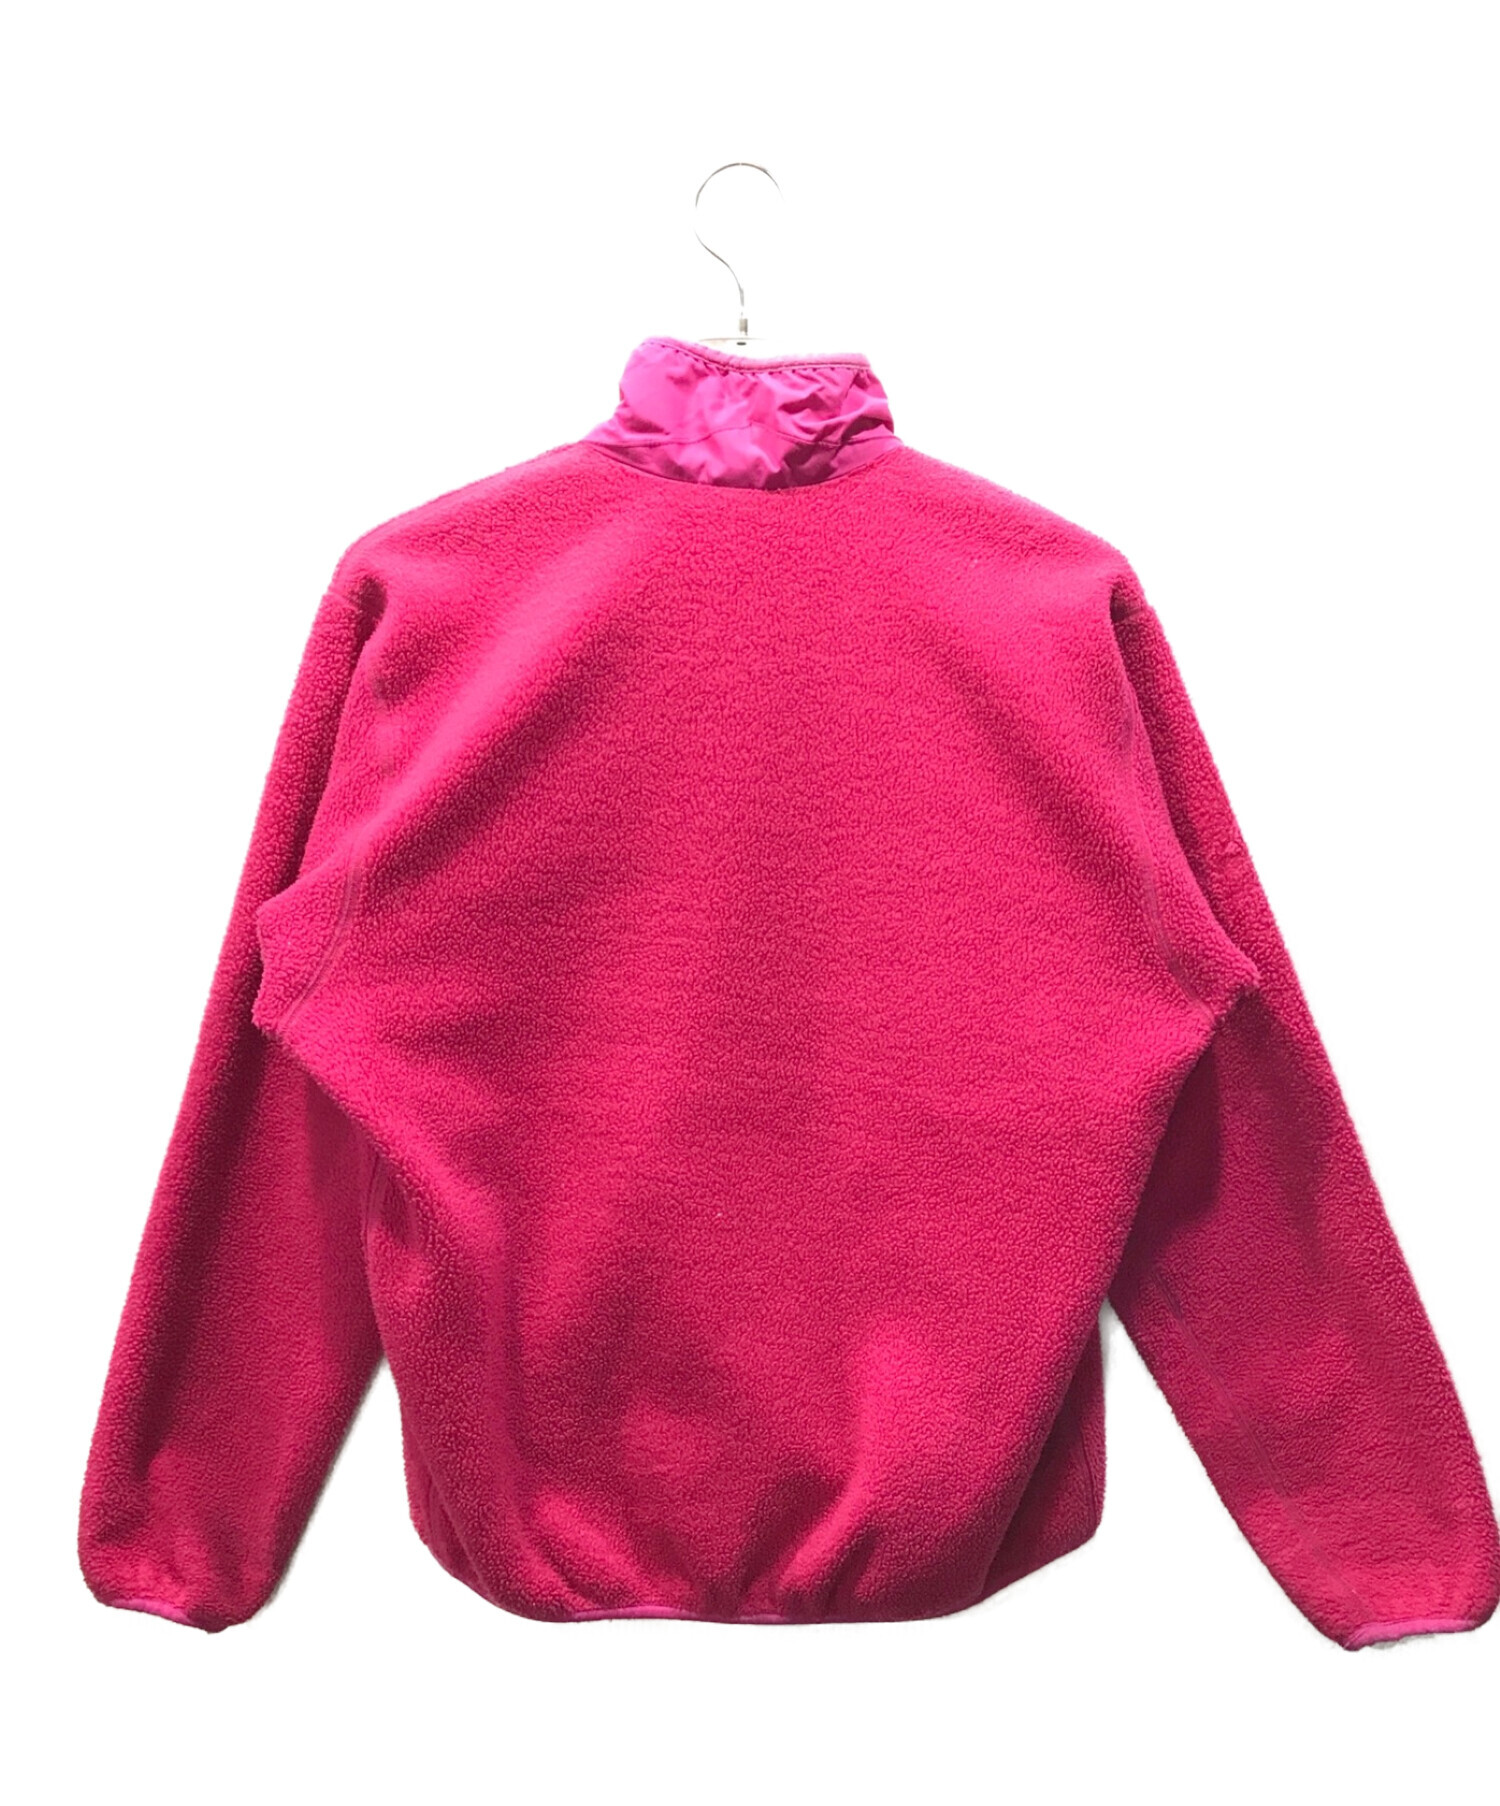 Patagonia (パタゴニア) フリースジャケット ピンク サイズ:M